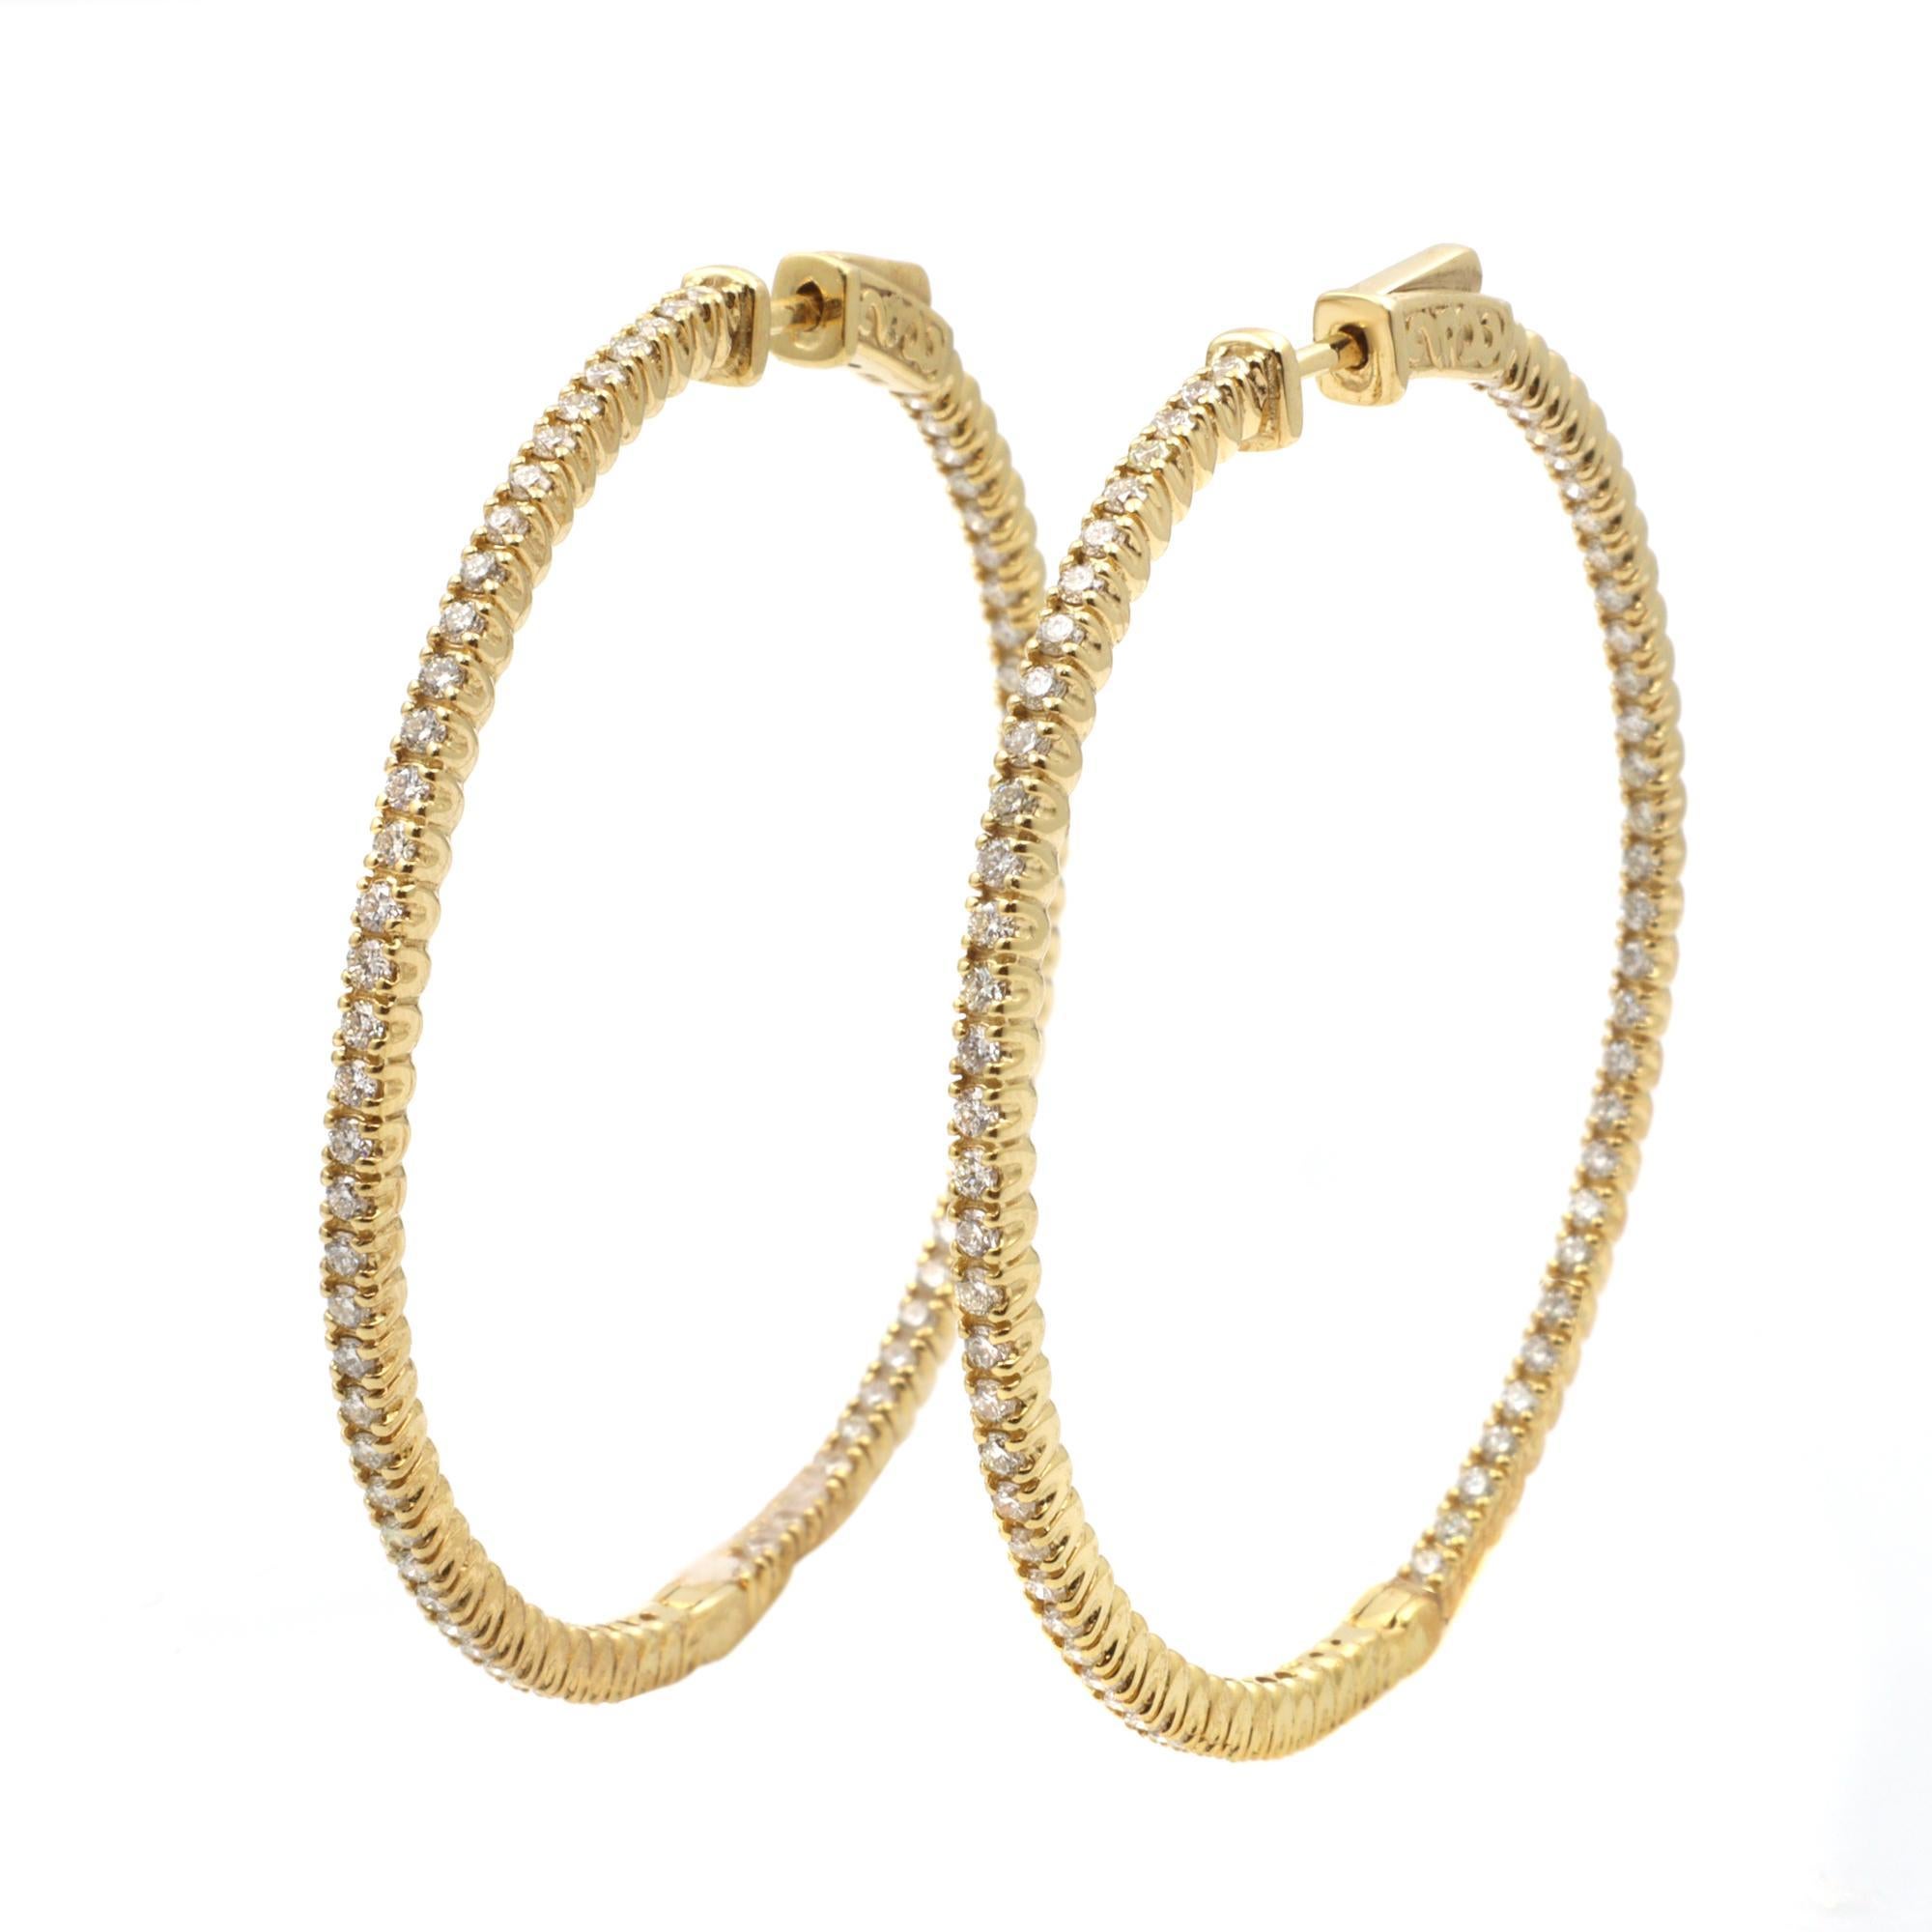 Rachel Koen Inside Out Diamond Hoop Earrings 14K Yellow Gold 1.75cttw In New Condition For Sale In New York, NY